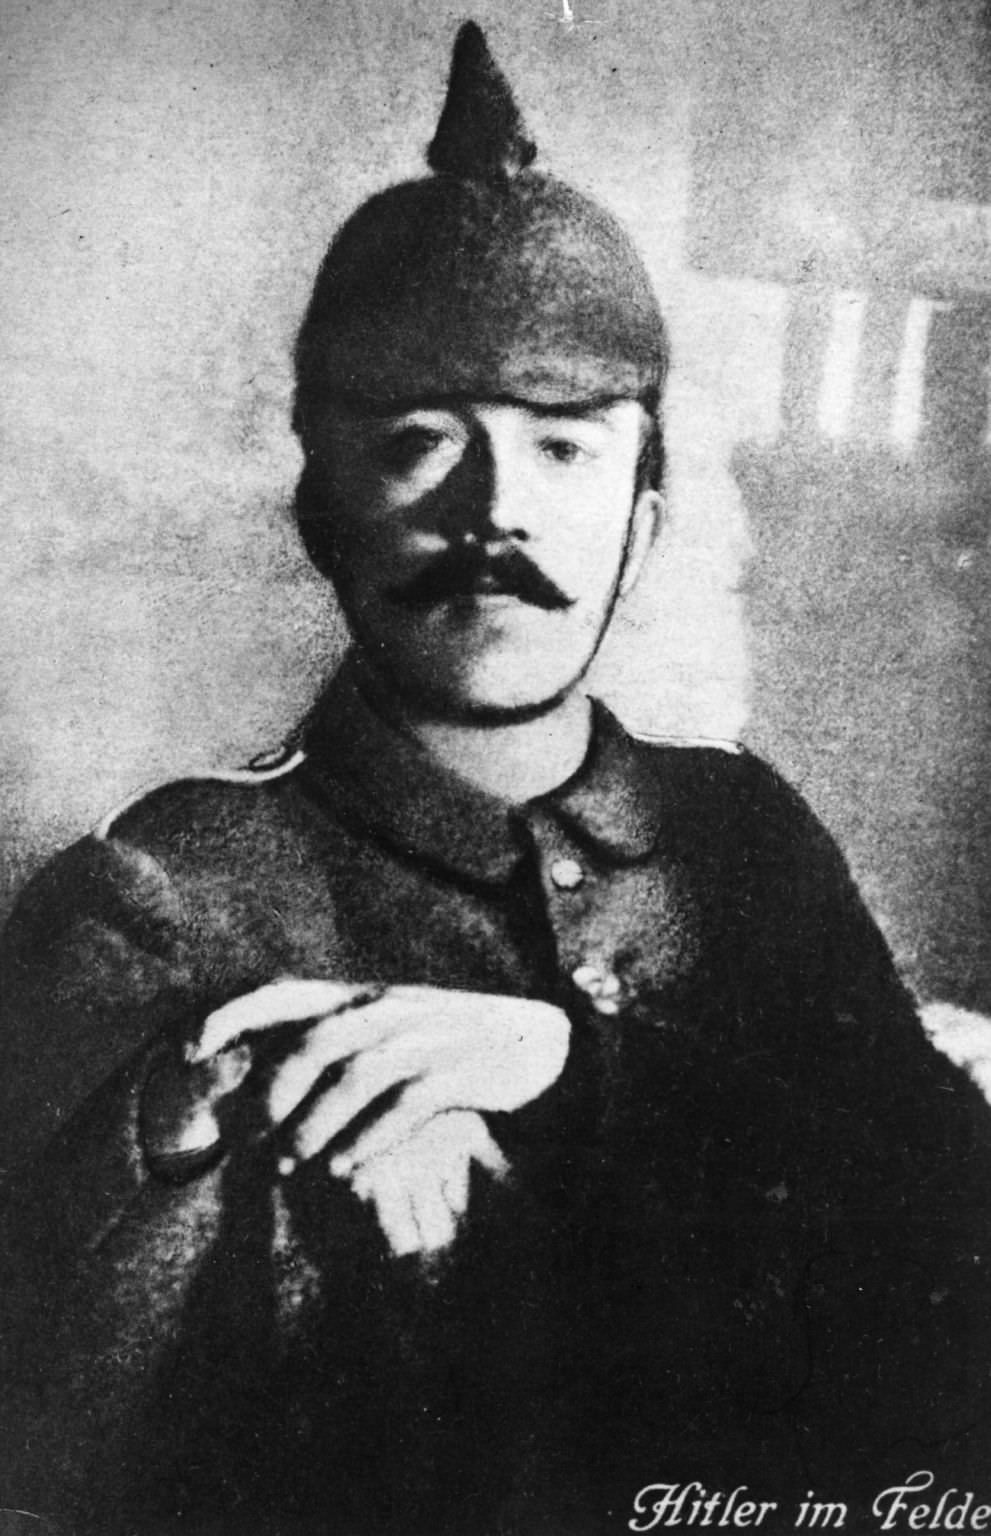 Adolf Hitler dressed in his field uniform during World War I